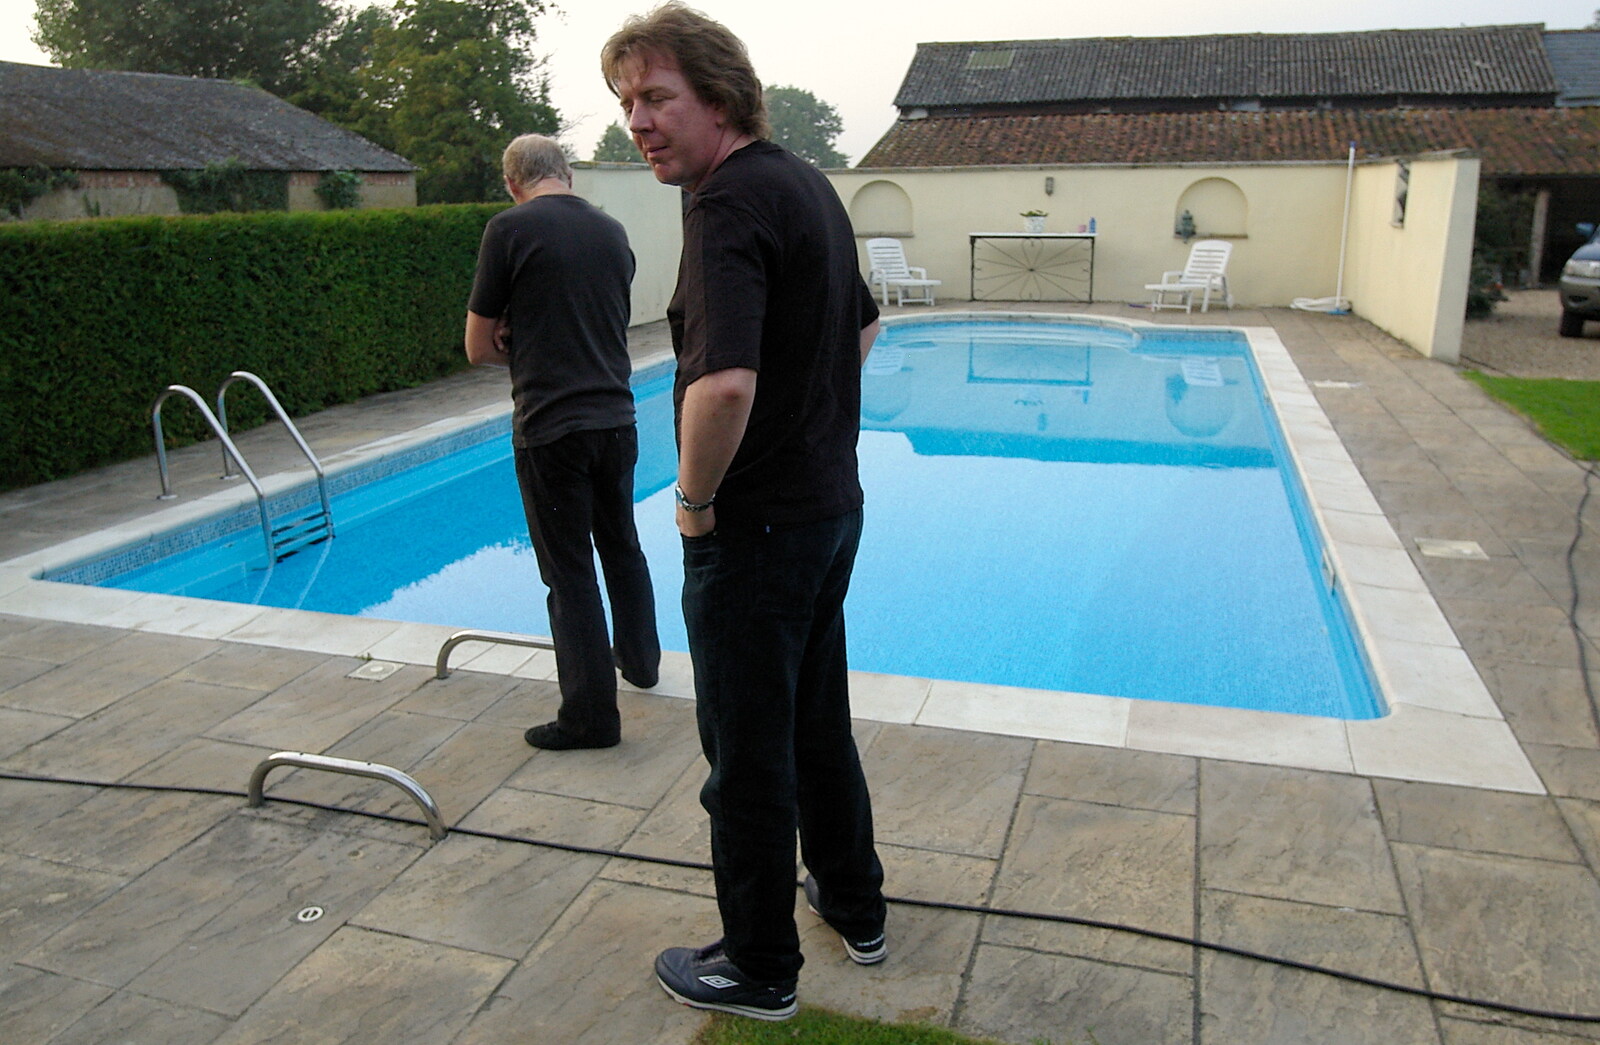 We inspect the swimming pool from The BBs Play Bressingham, Norfolk - 3rd September 2005